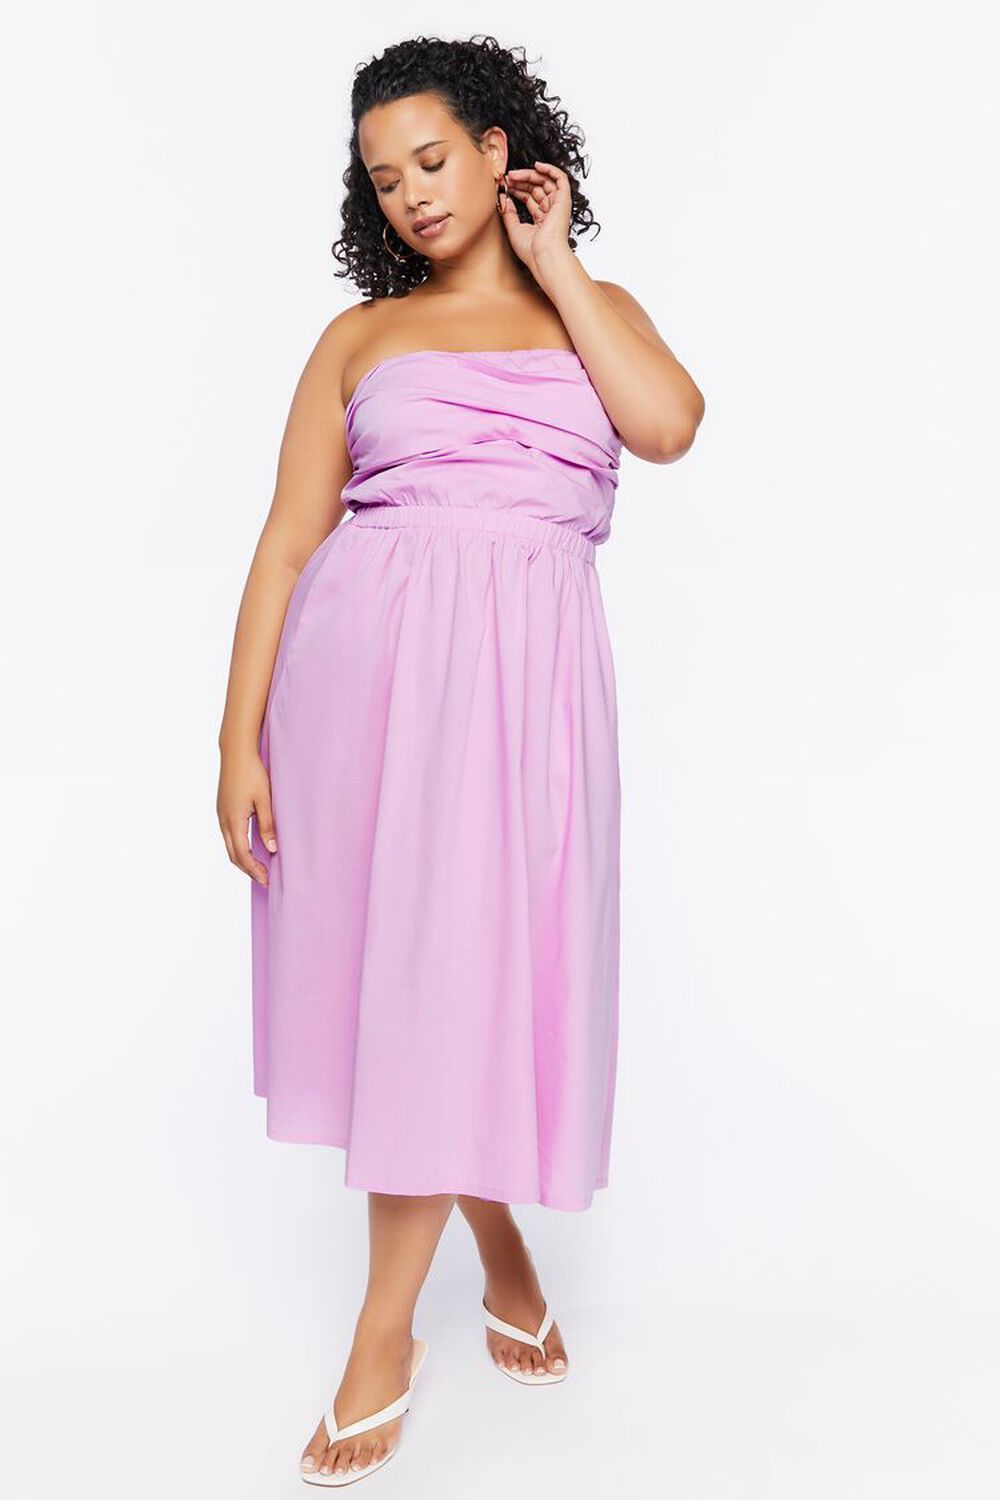 WISTERIA Plus Size Strapless Midi Dress, image 1